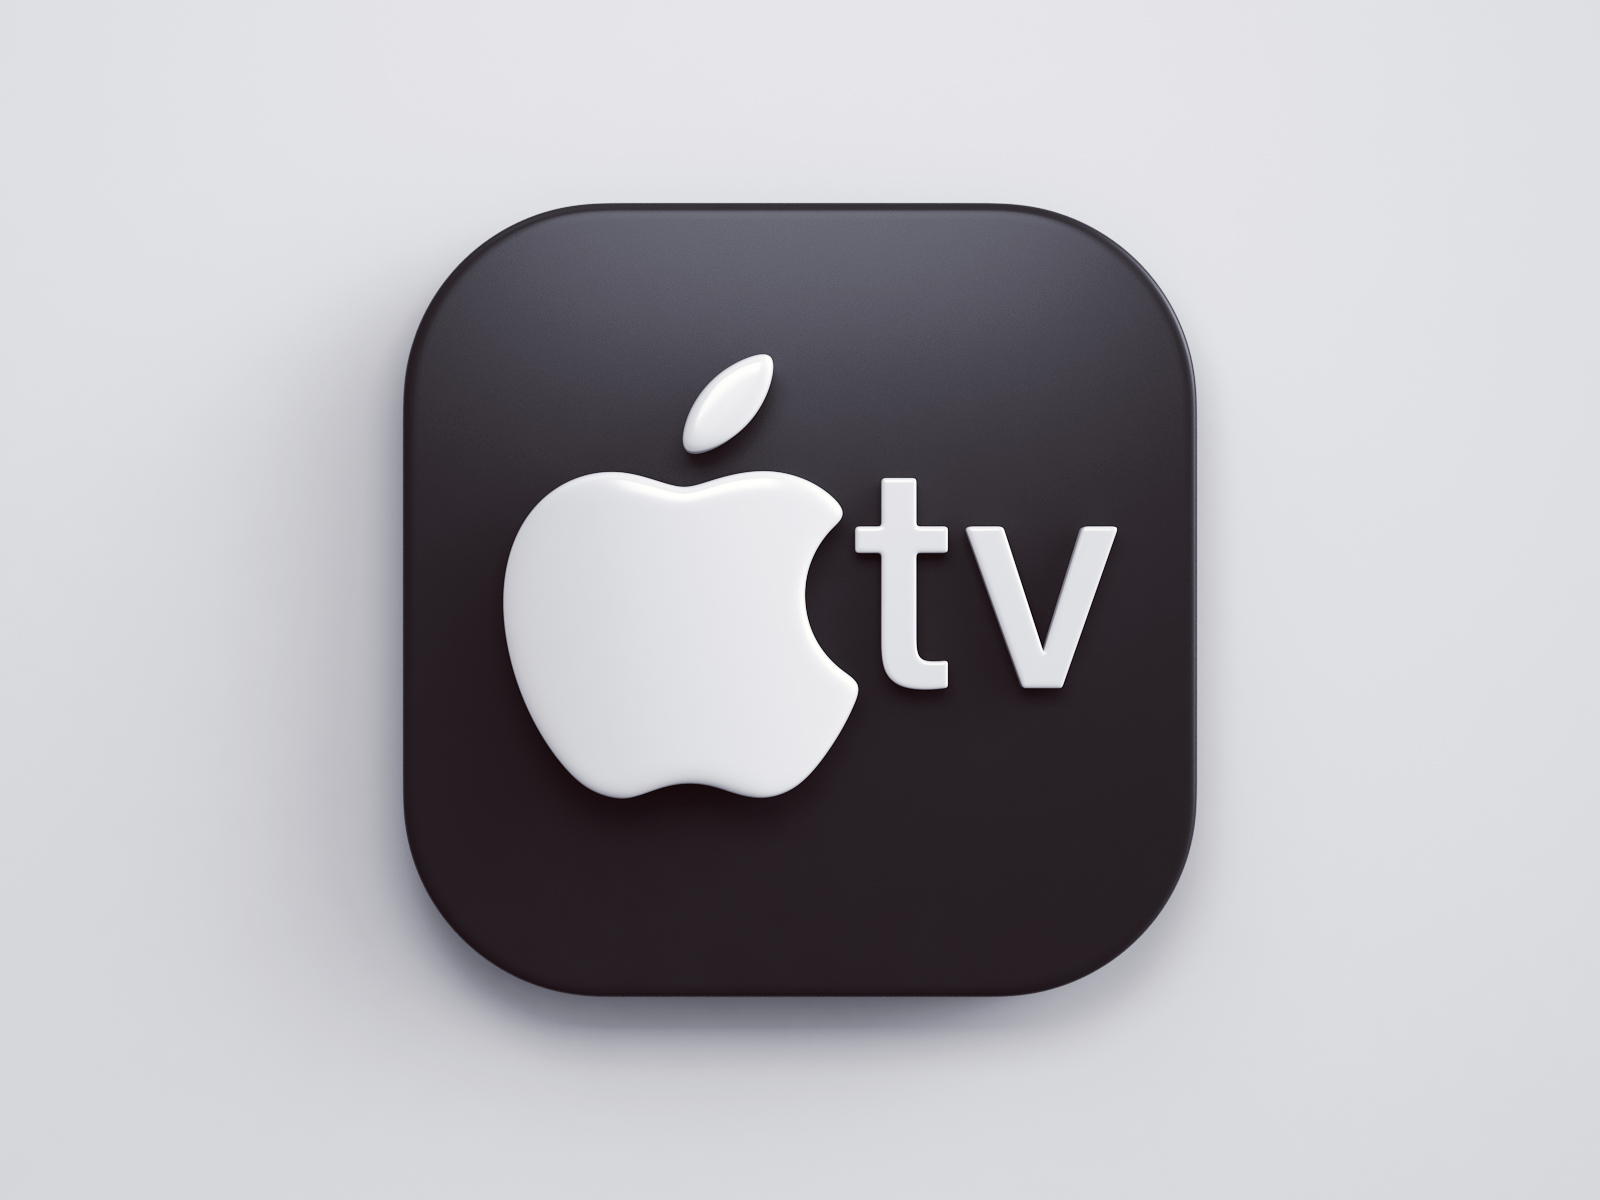 Подписка apple tv в россии. Apple TV+ логотип. Apple TV значок. Apple TV подписка. Иконка приложения Apple TV.